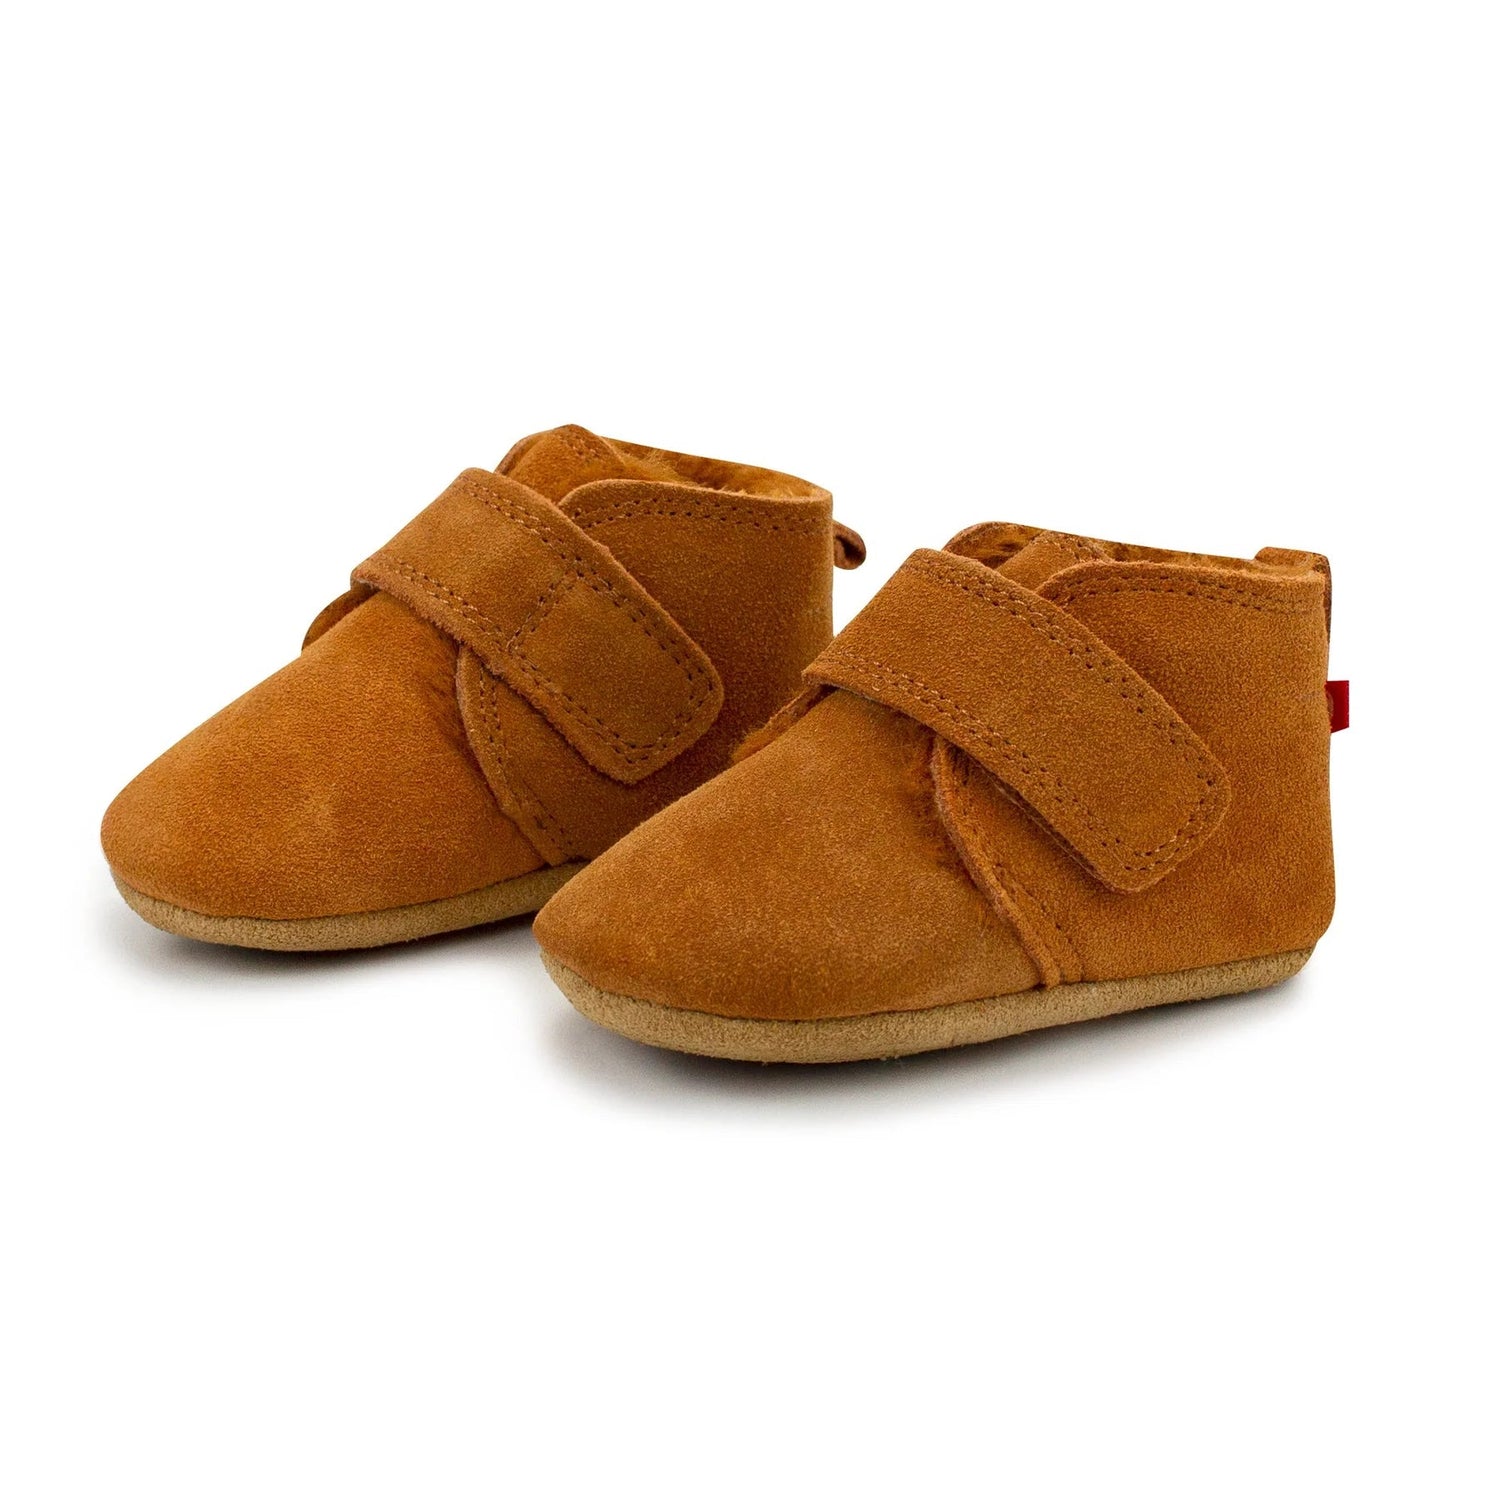 Pecan Leather Baby Shoe 100 ACCESSORIES BABY Zutano 